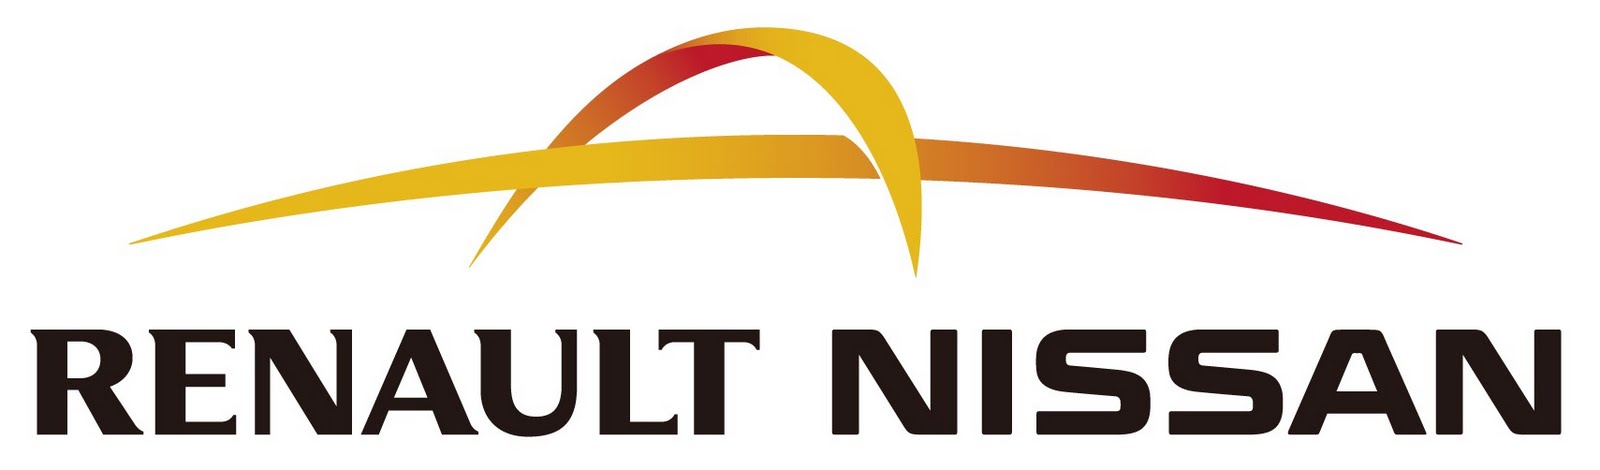 Alliance renault nissan logo #8